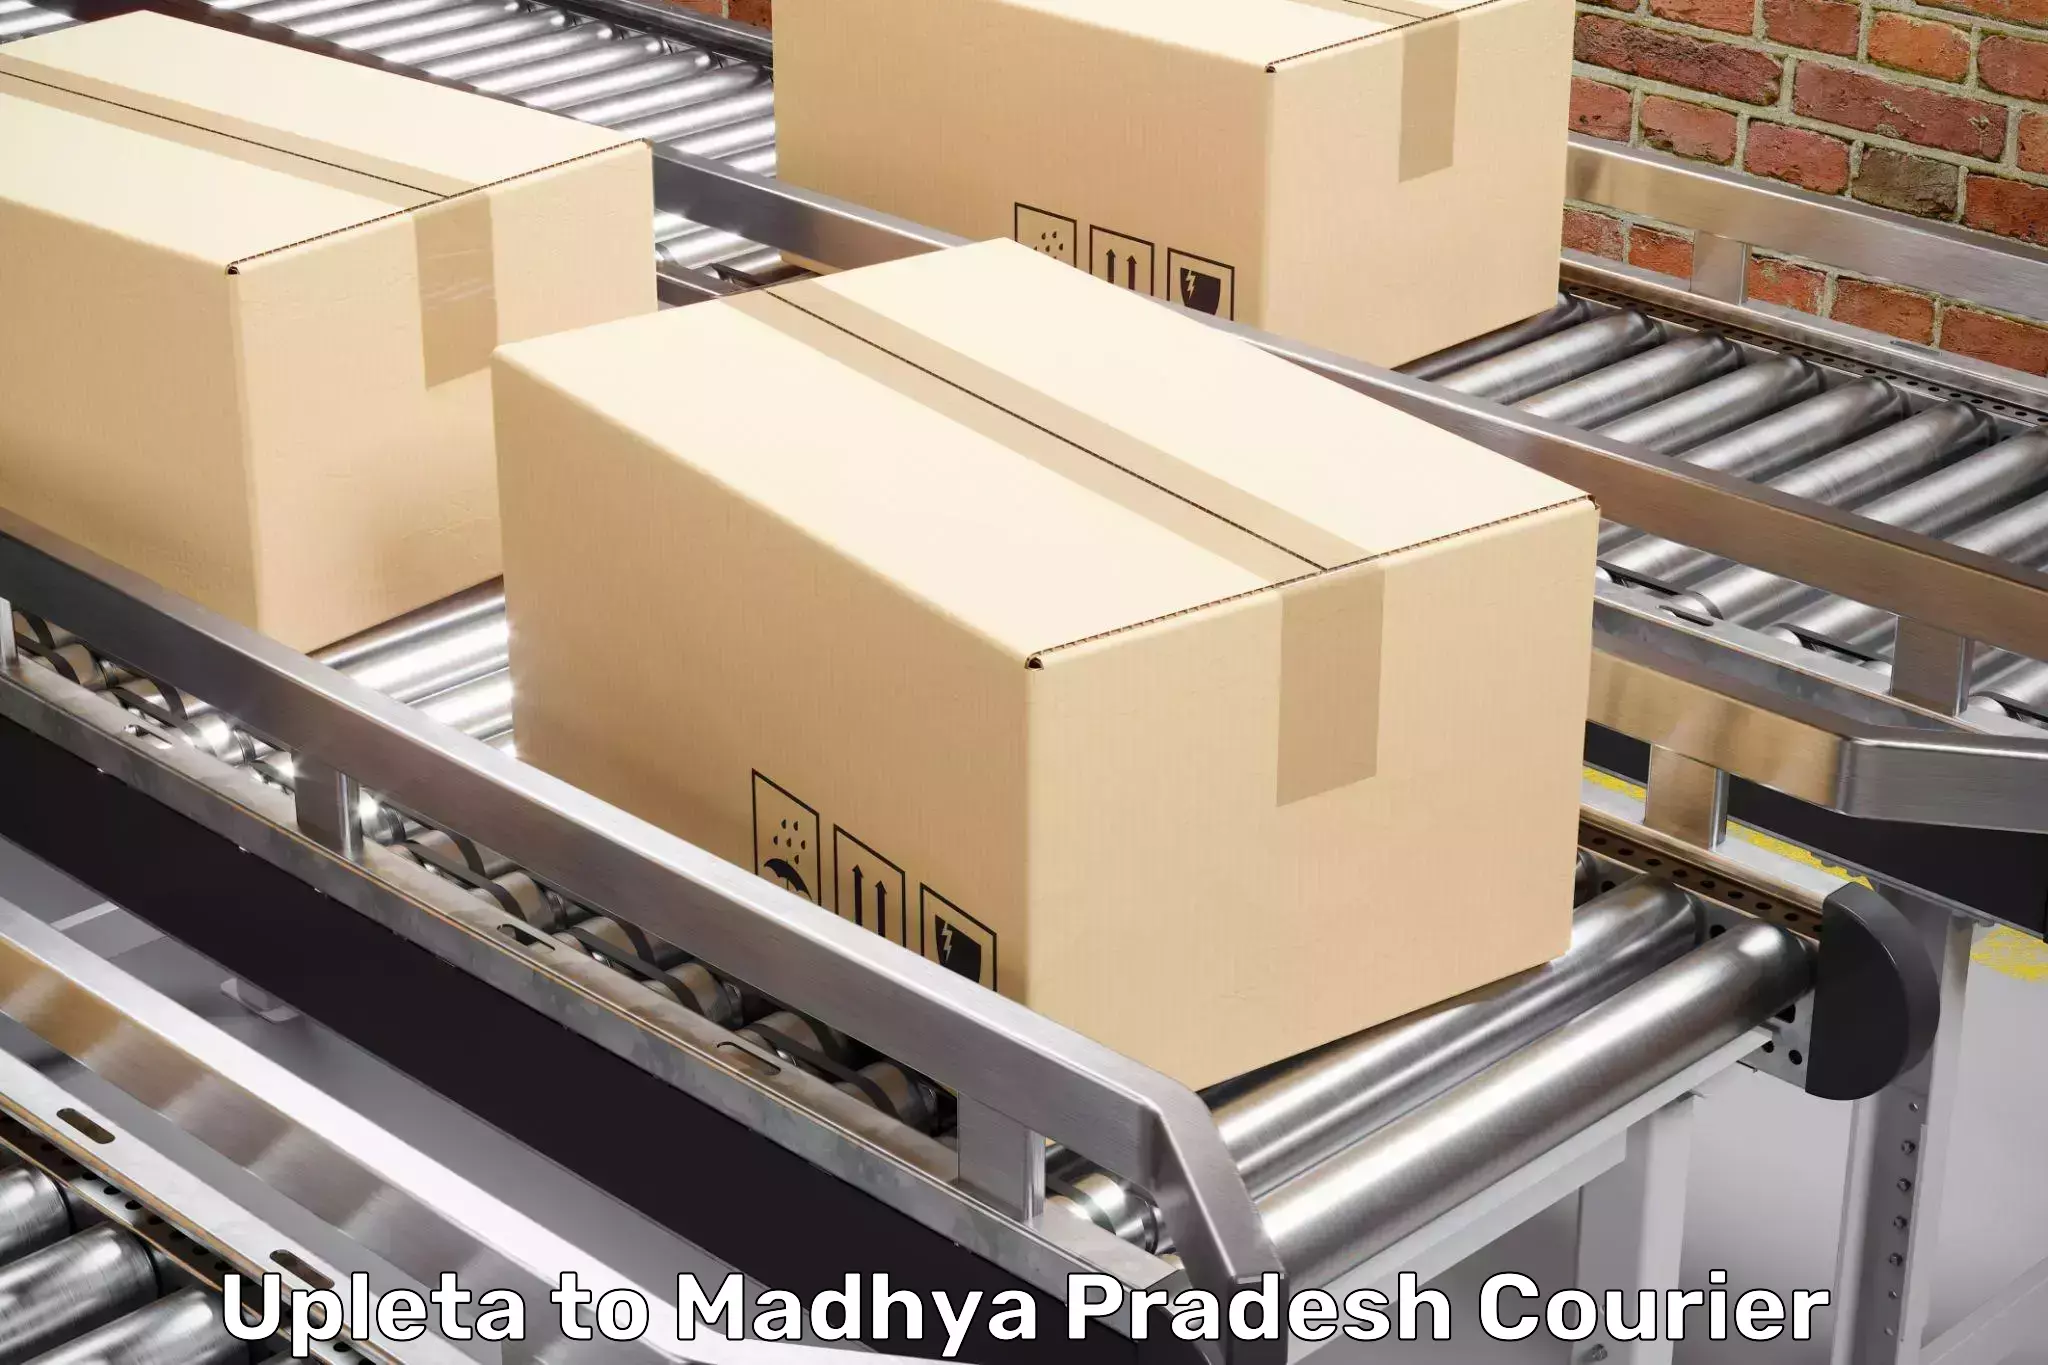 Professional moving company Upleta to Jaitwara